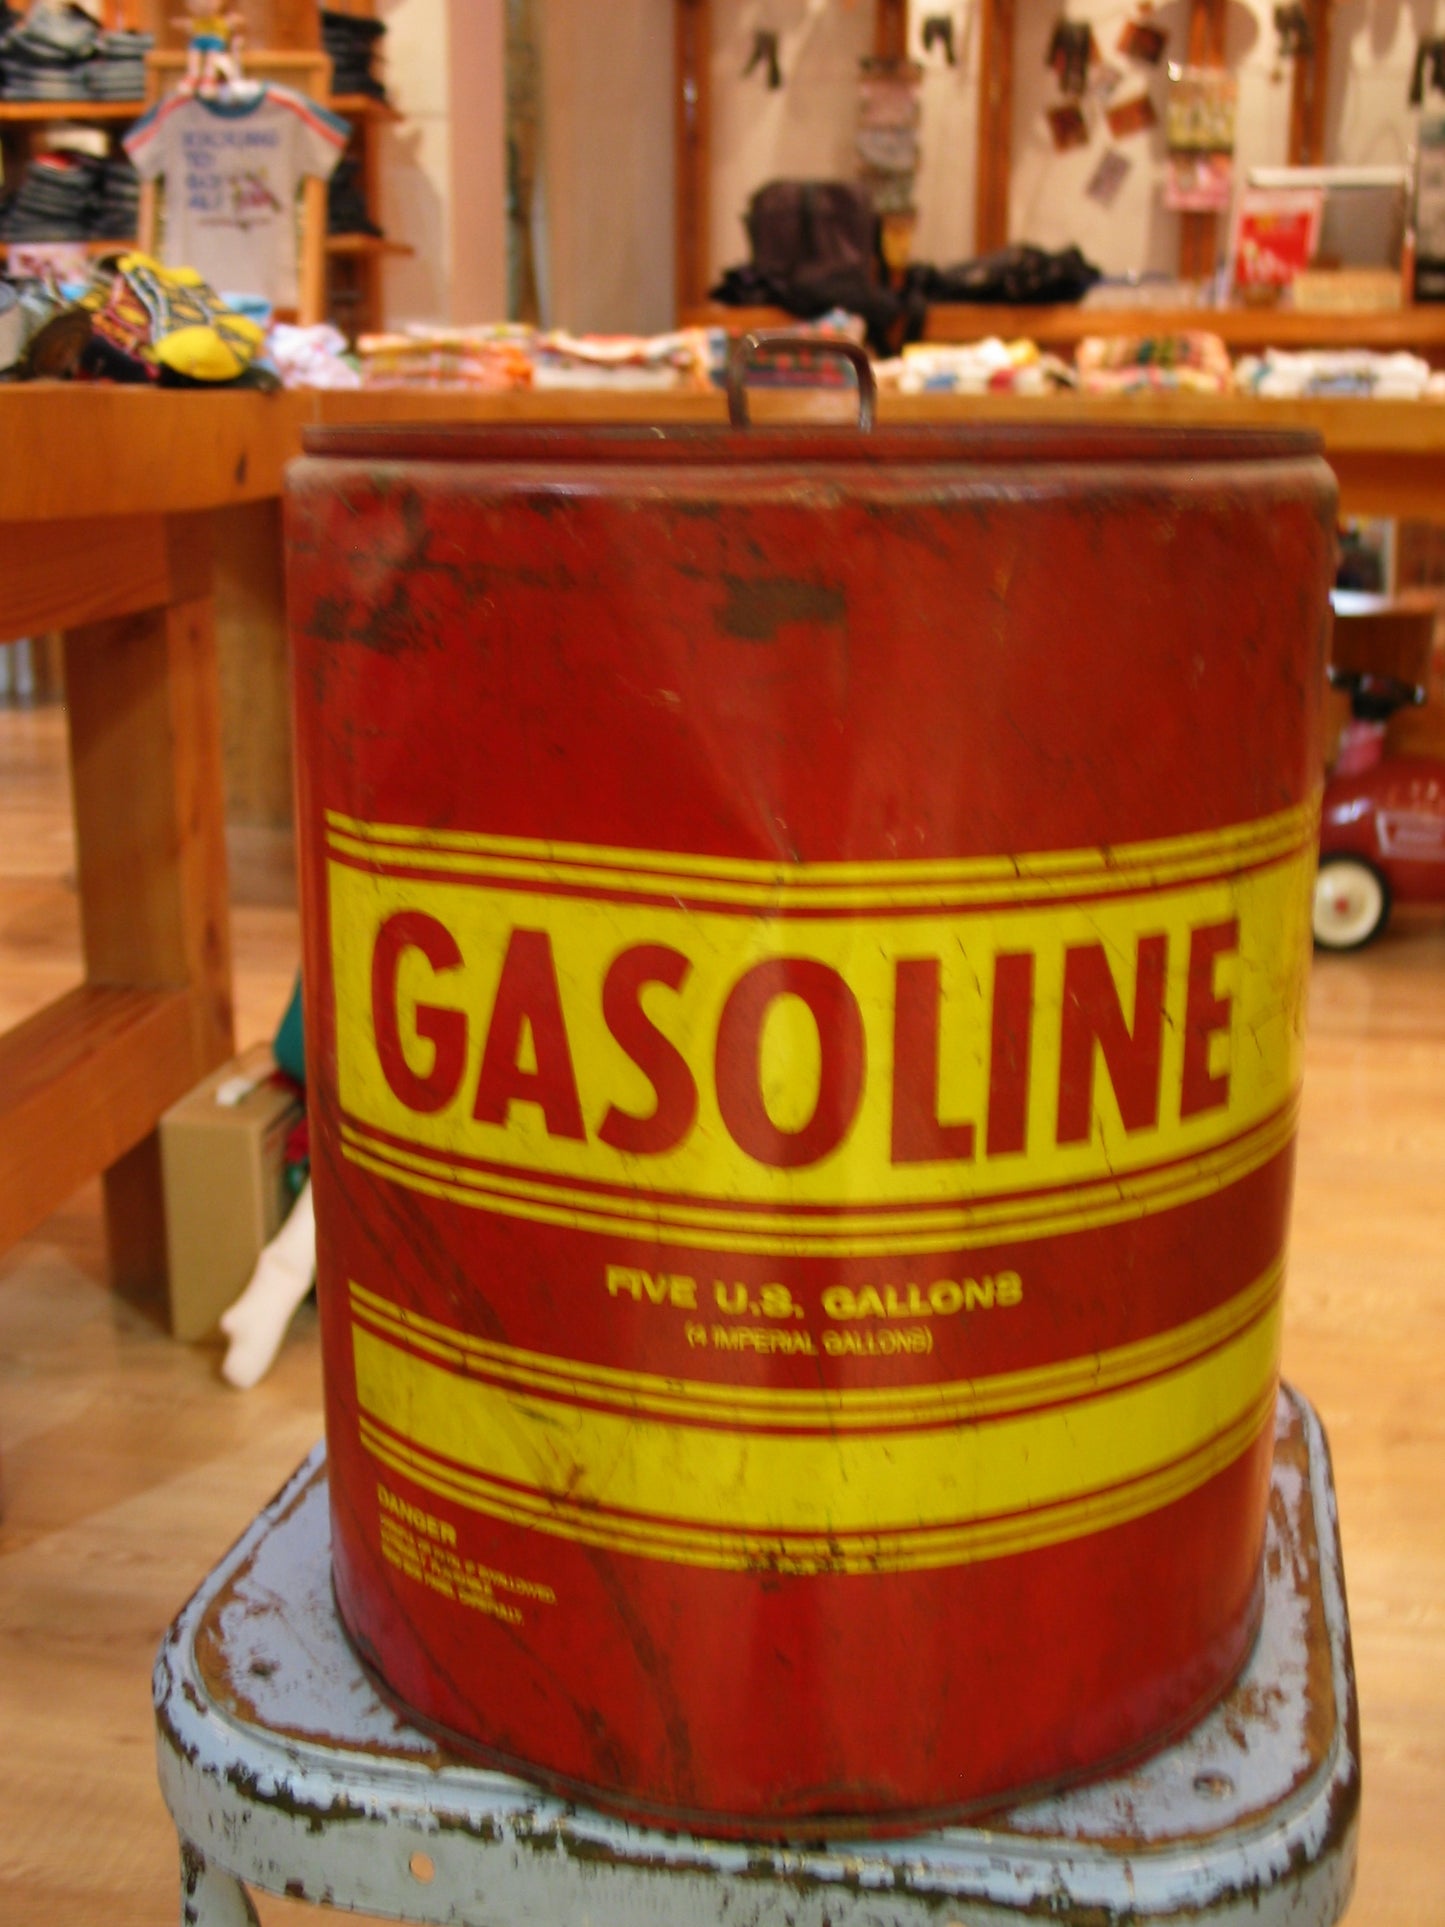 U.S.A. Vintage Stancan 5 Gallon Round Metal Gas Can Display 擺設